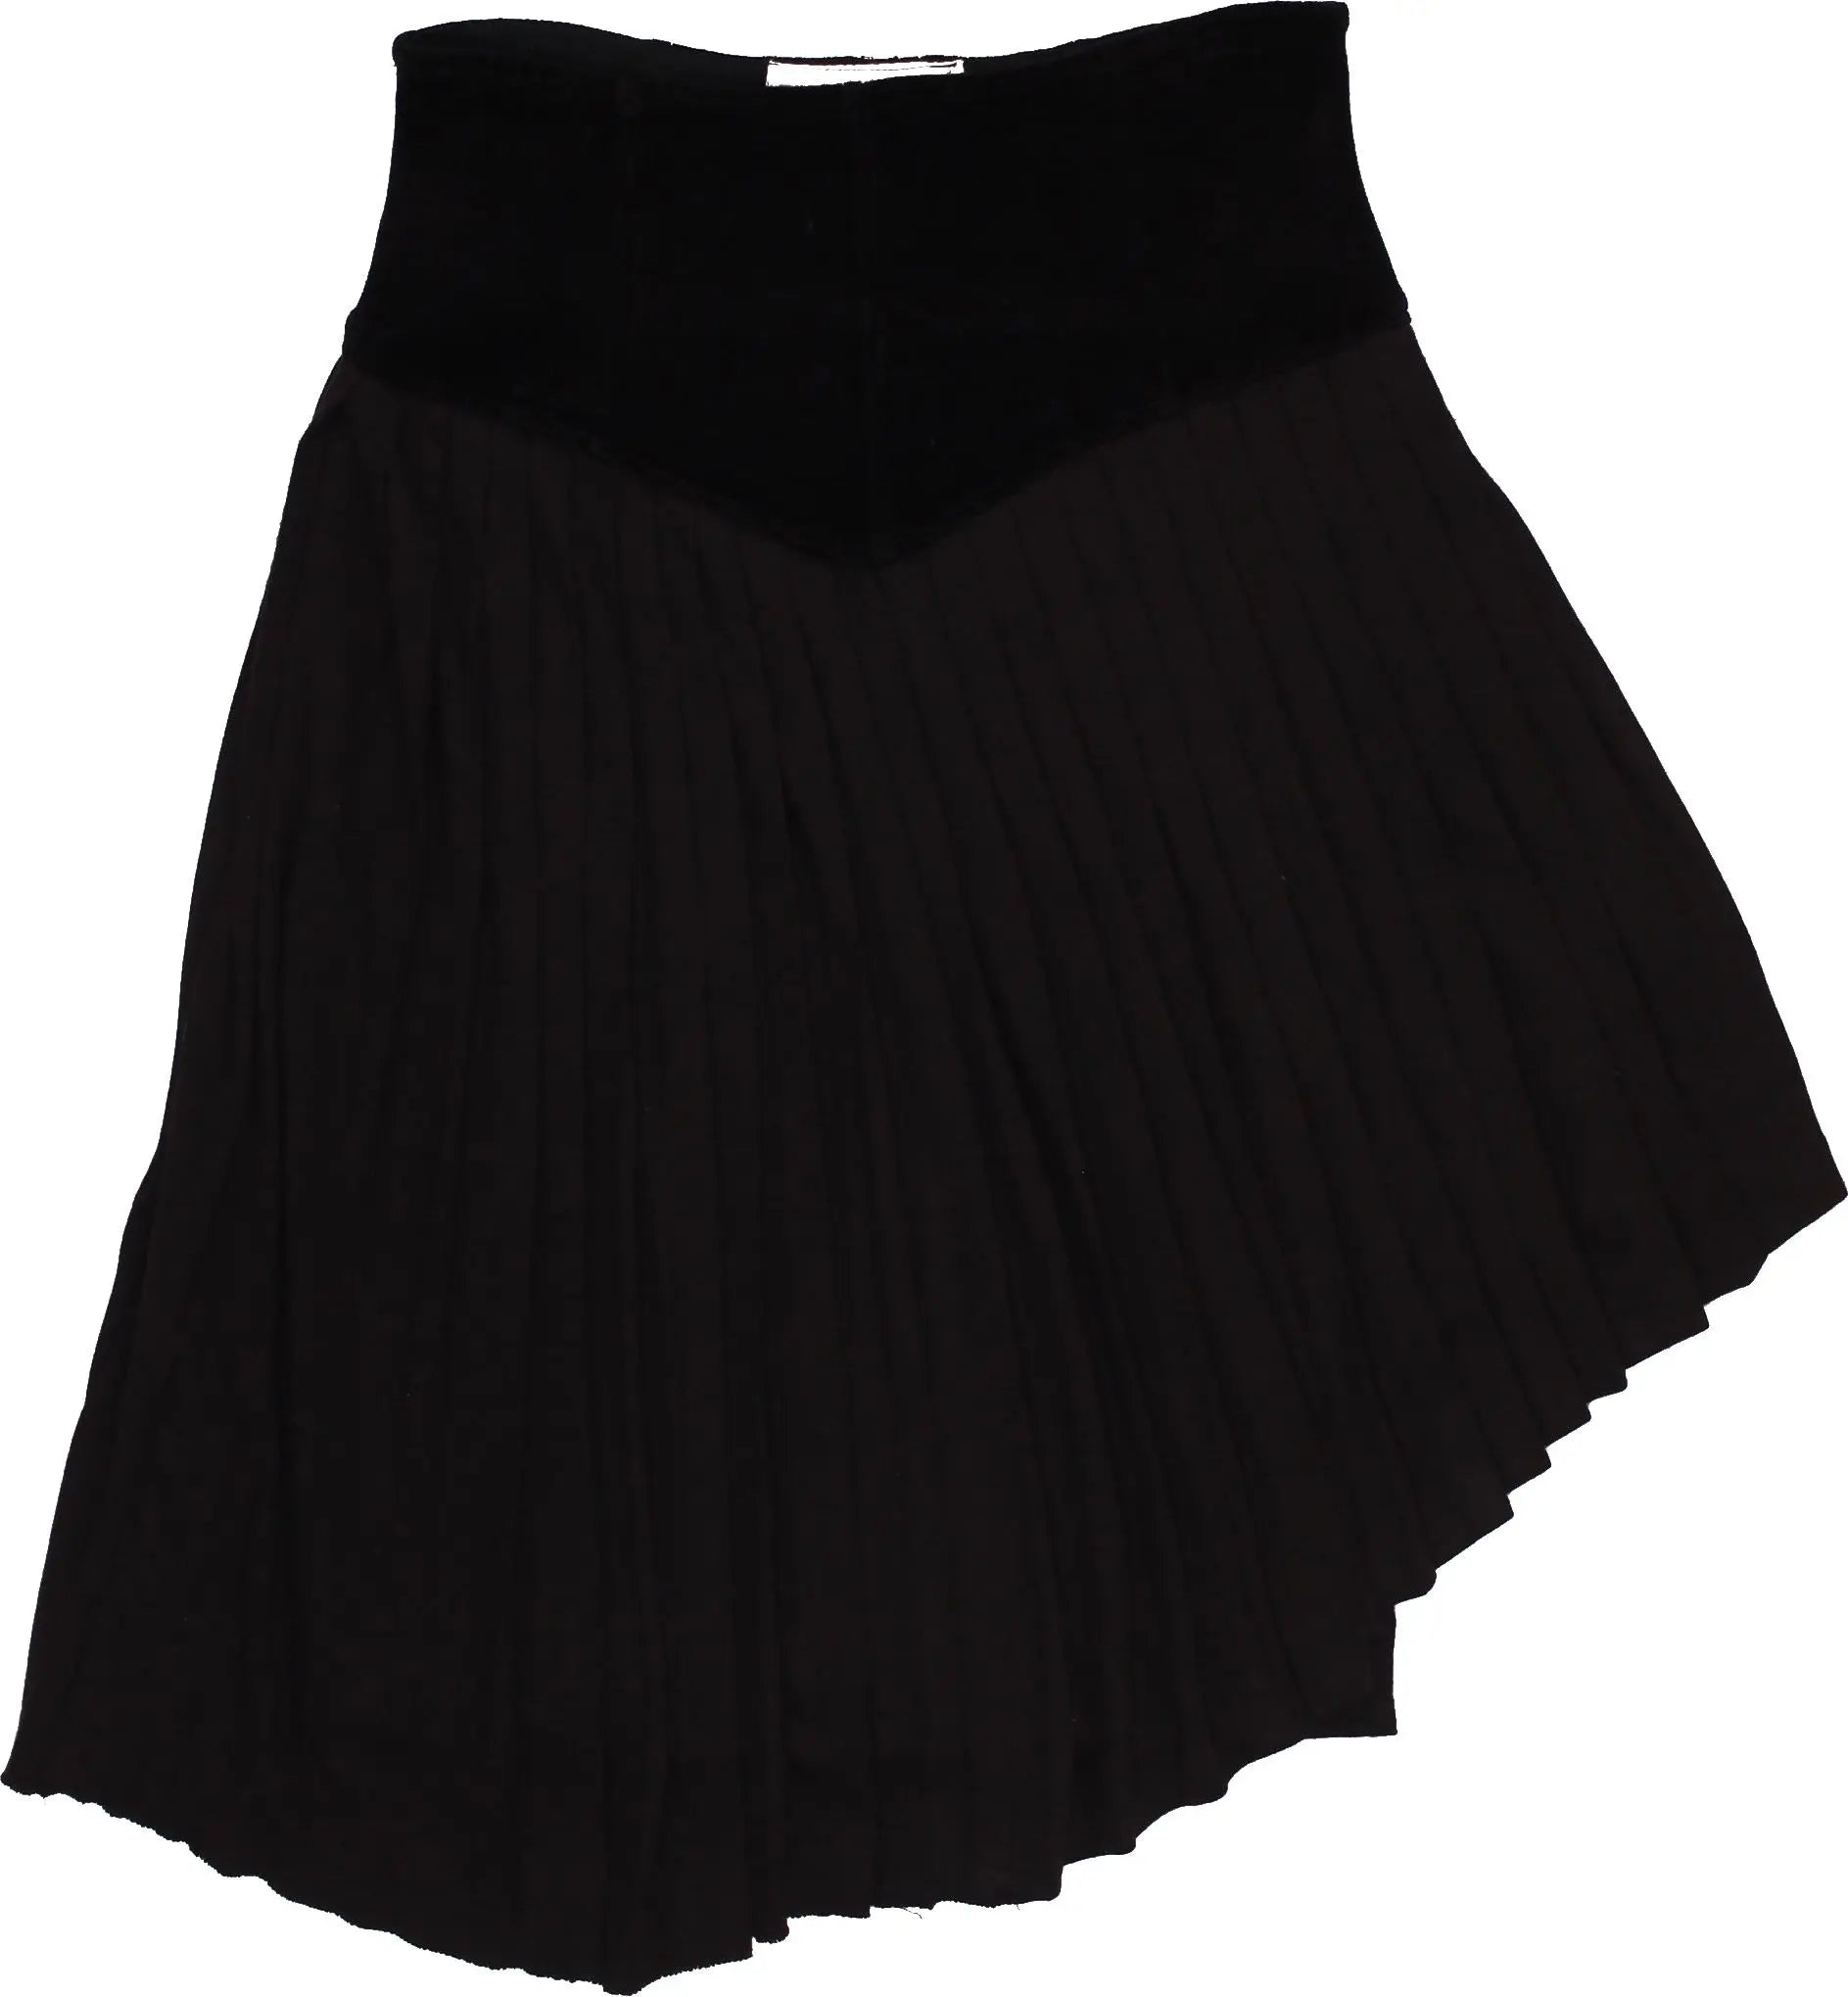 Gianna Salvioli - Velvet Pleated Skirt- ThriftTale.com - Vintage and second handclothing